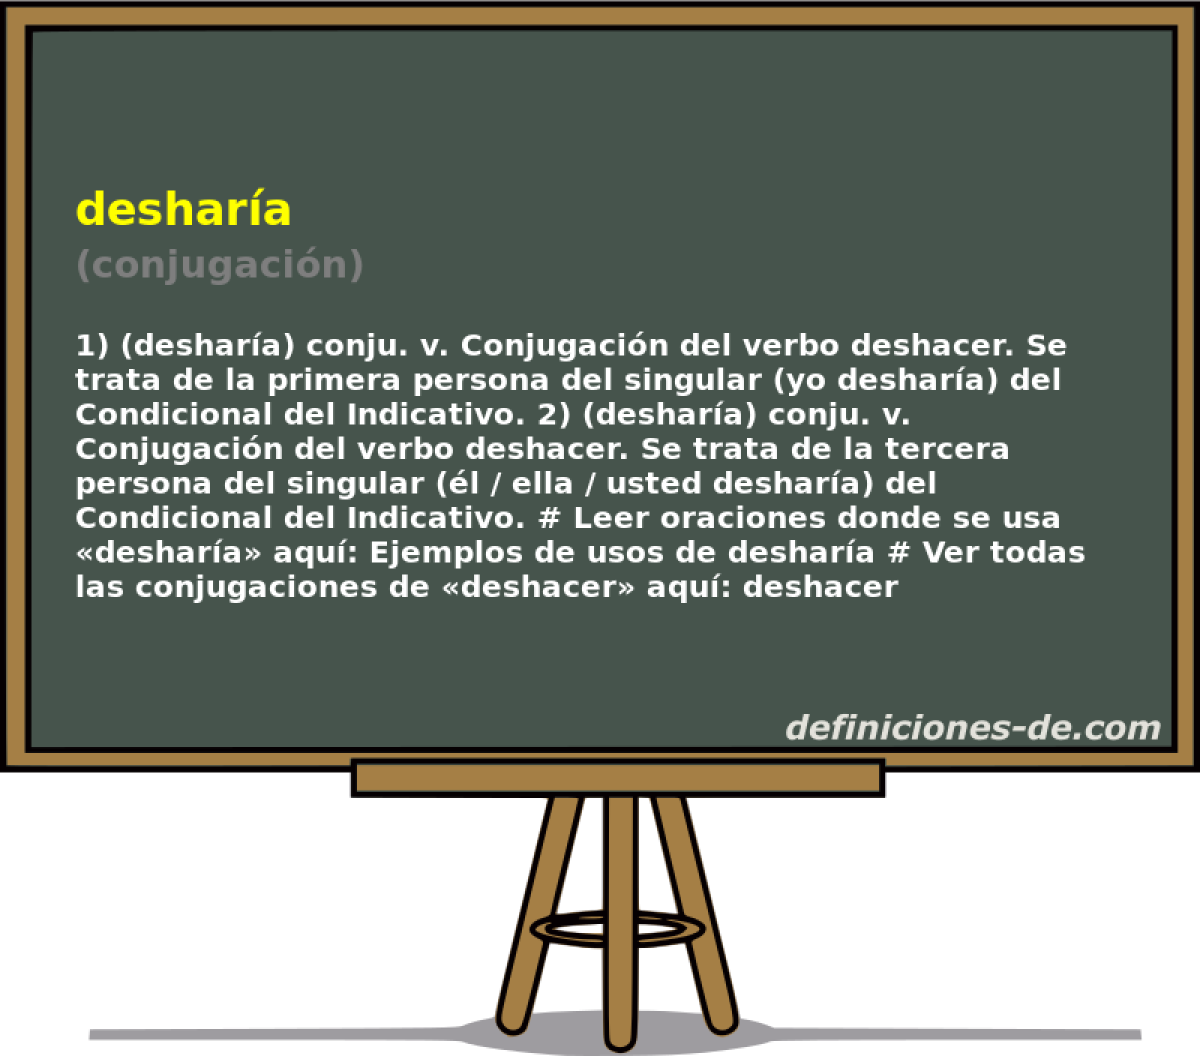 deshara (conjugacin)